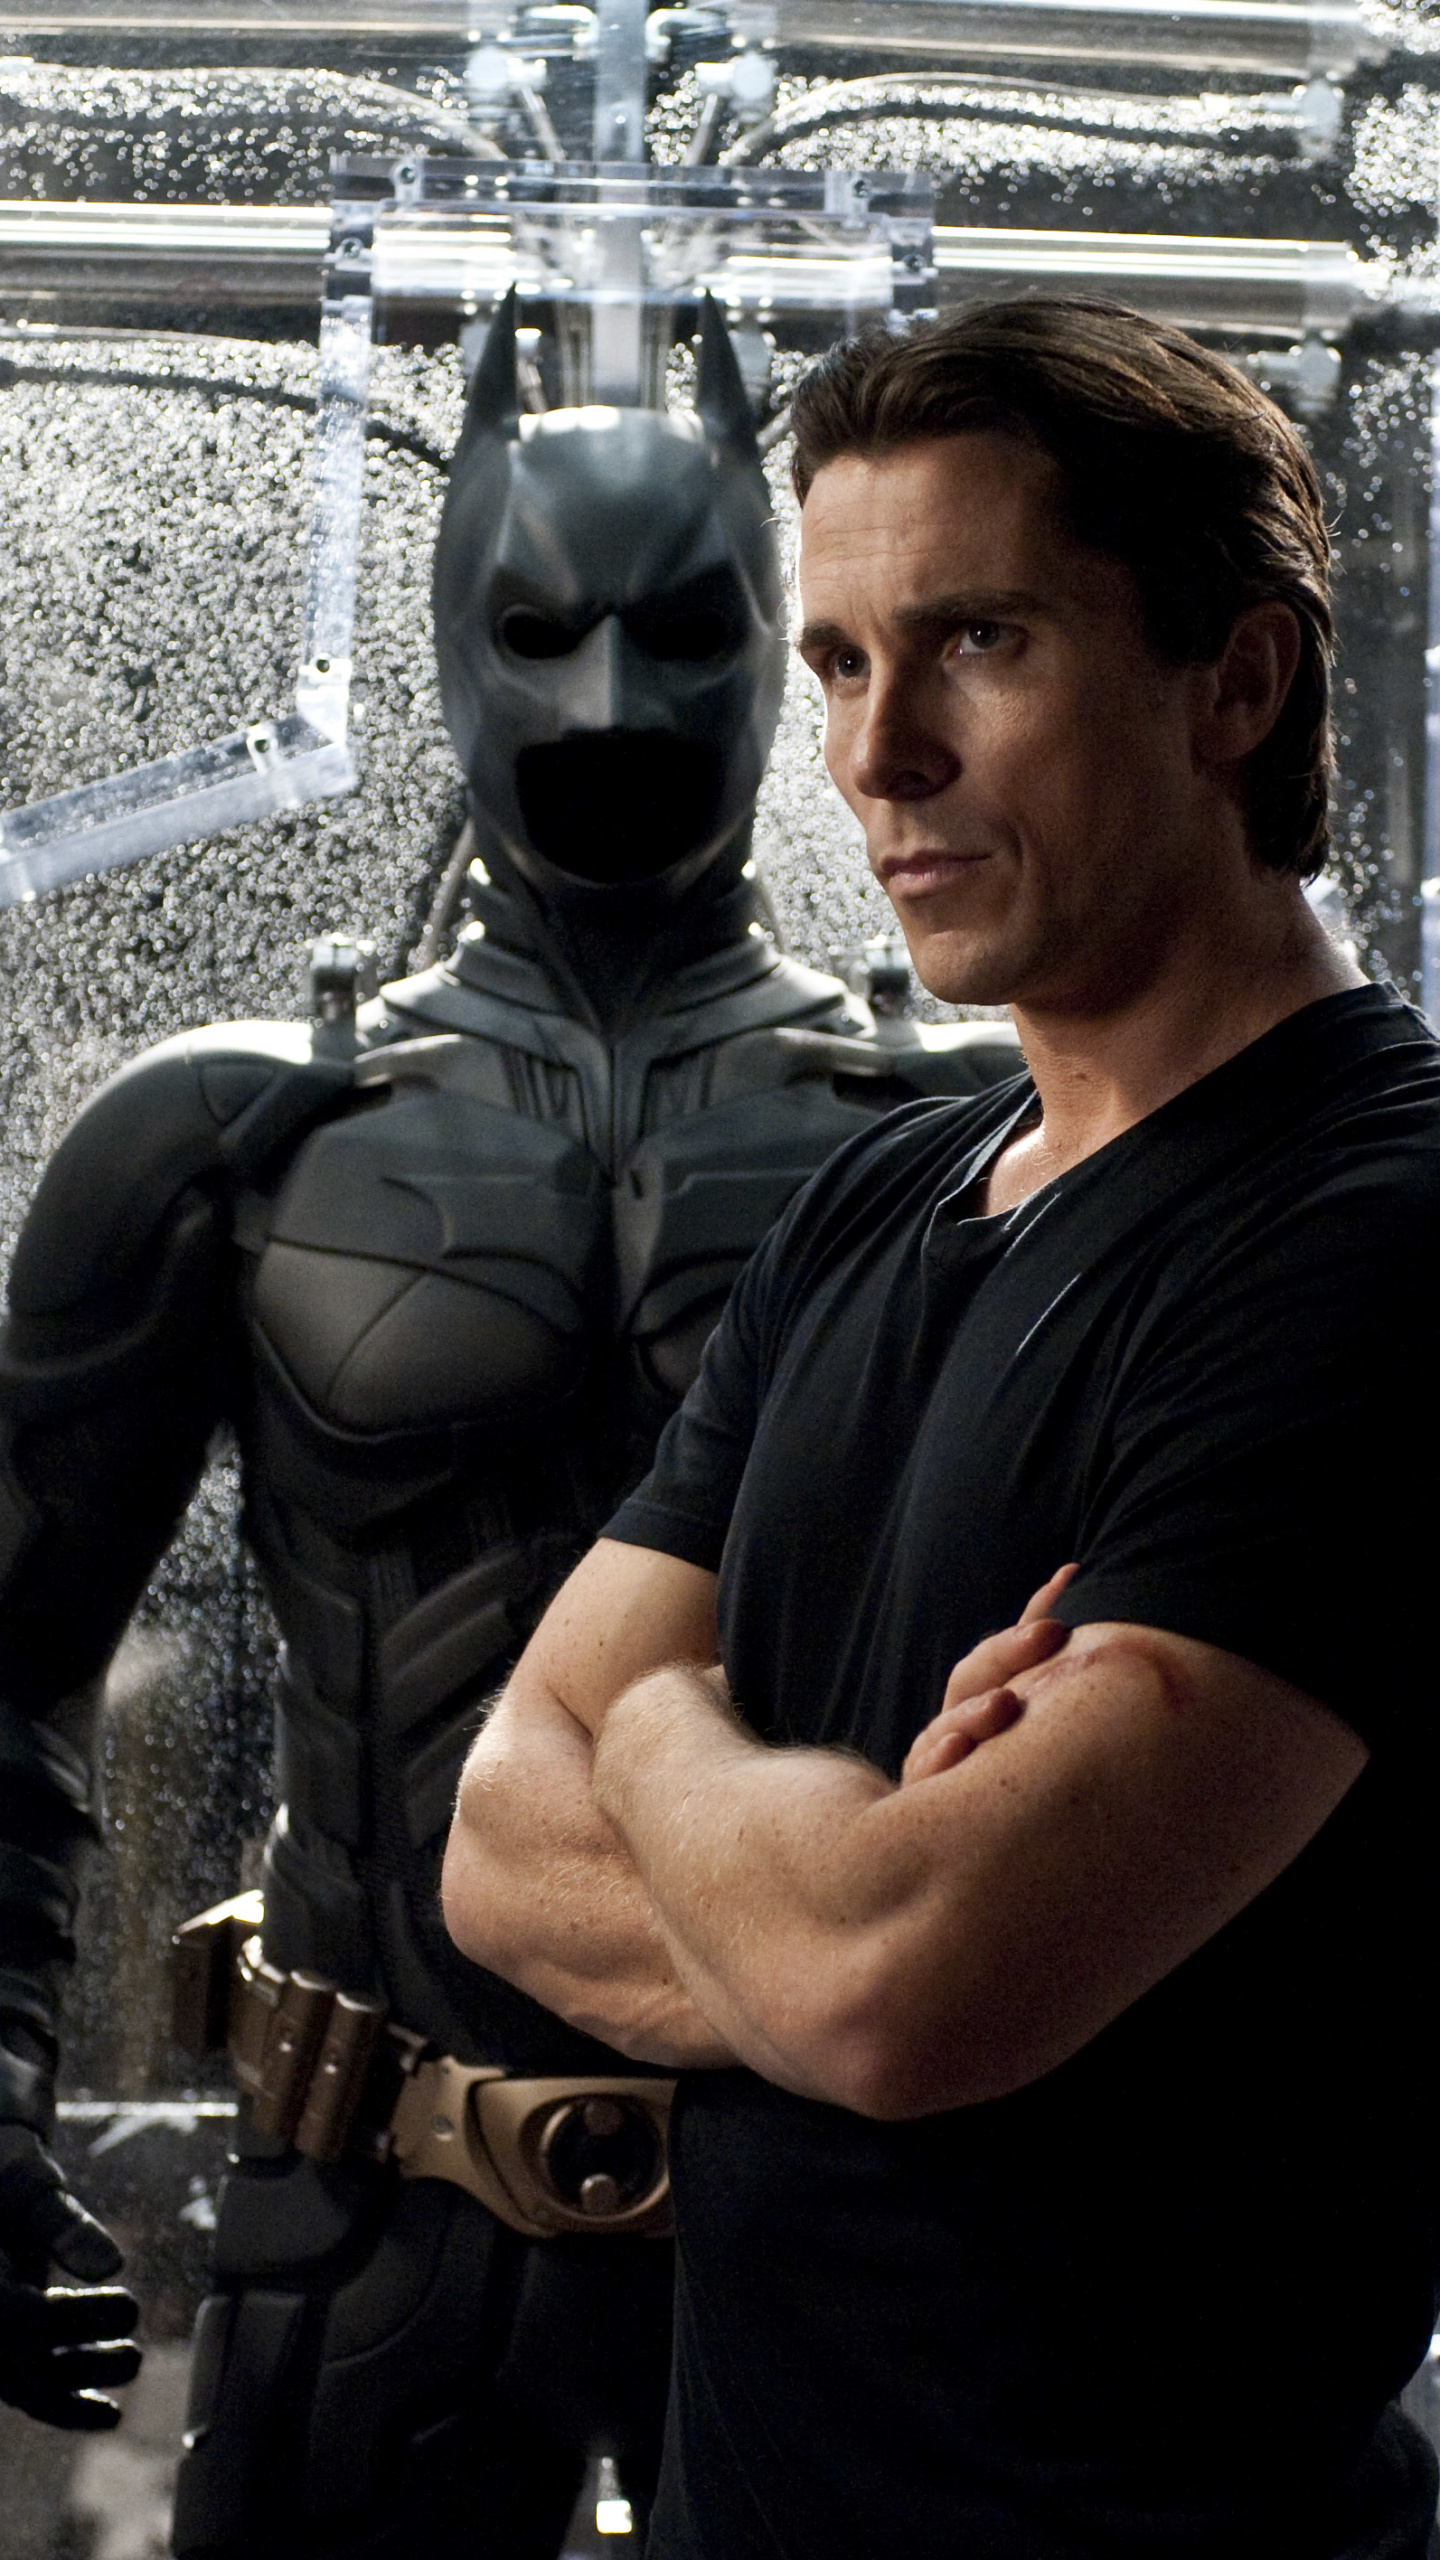 Christian Bale: The Dark Knight Rises, a 2012 superhero film directed by Christopher Nolan, Bruce Wayne. 1440x2560 HD Wallpaper.